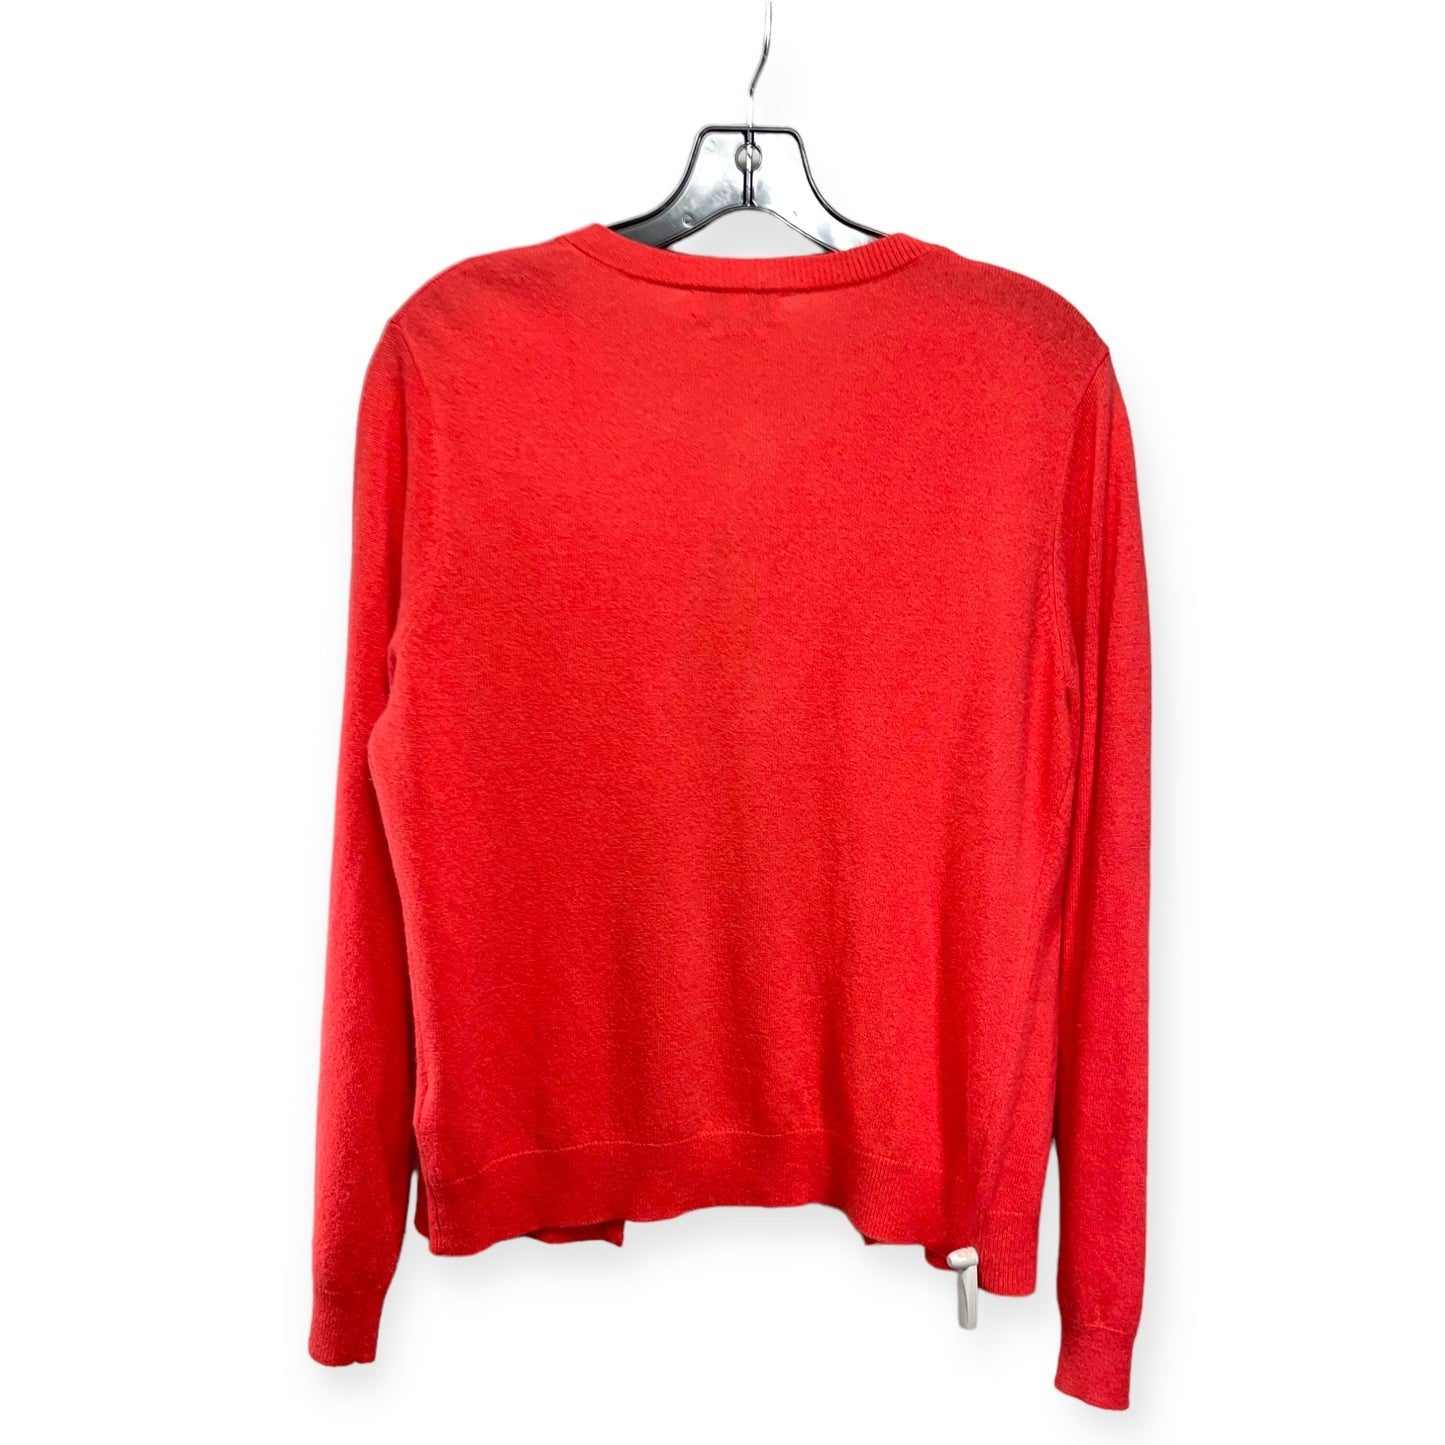 Sweater Cardigan By Vineyard Vines  Size: M